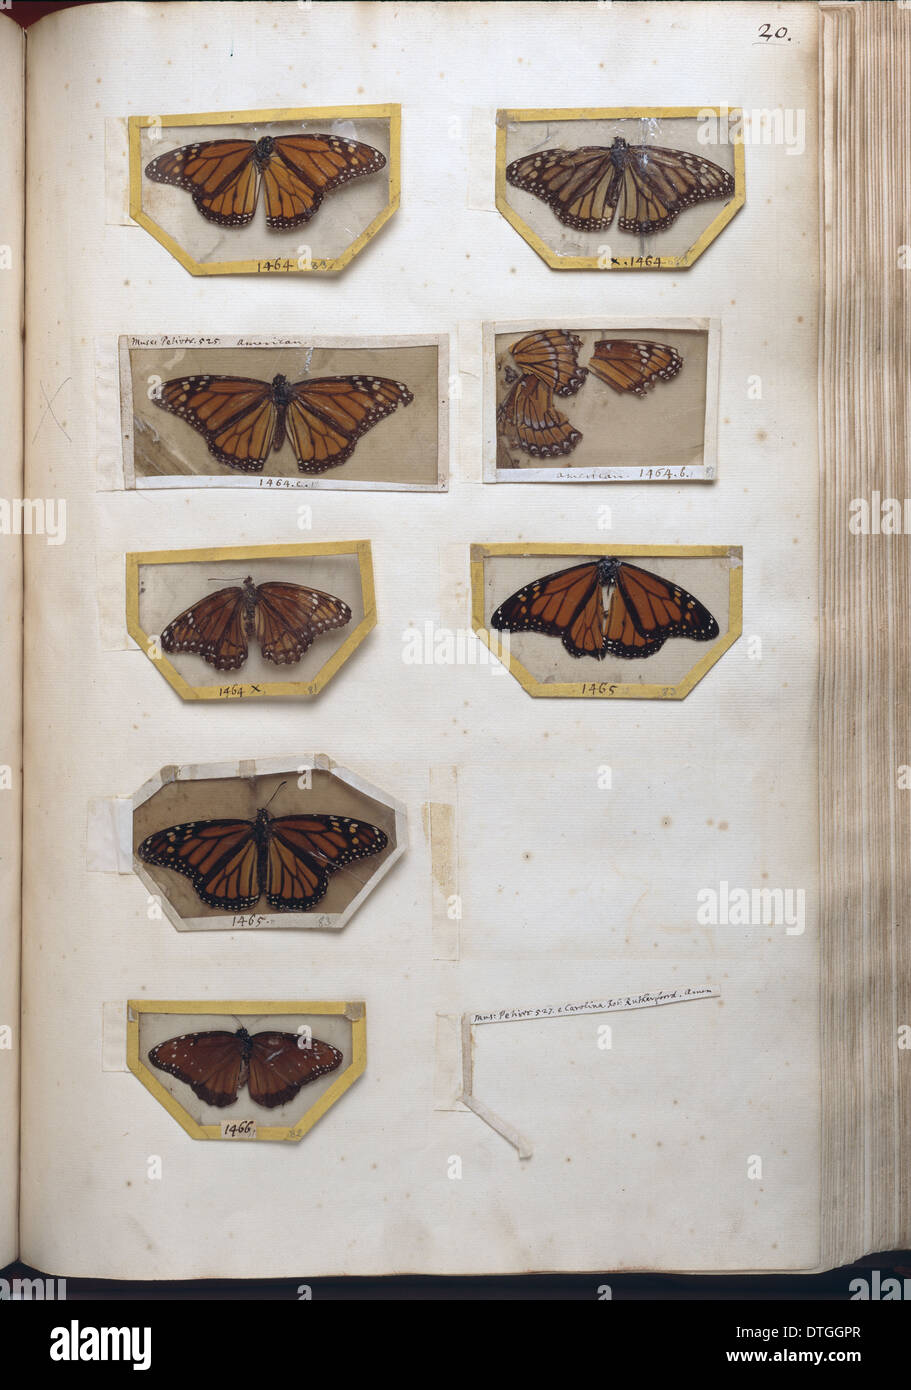 Danaidae sp., milkweed butterflies in mounts Stock Photo